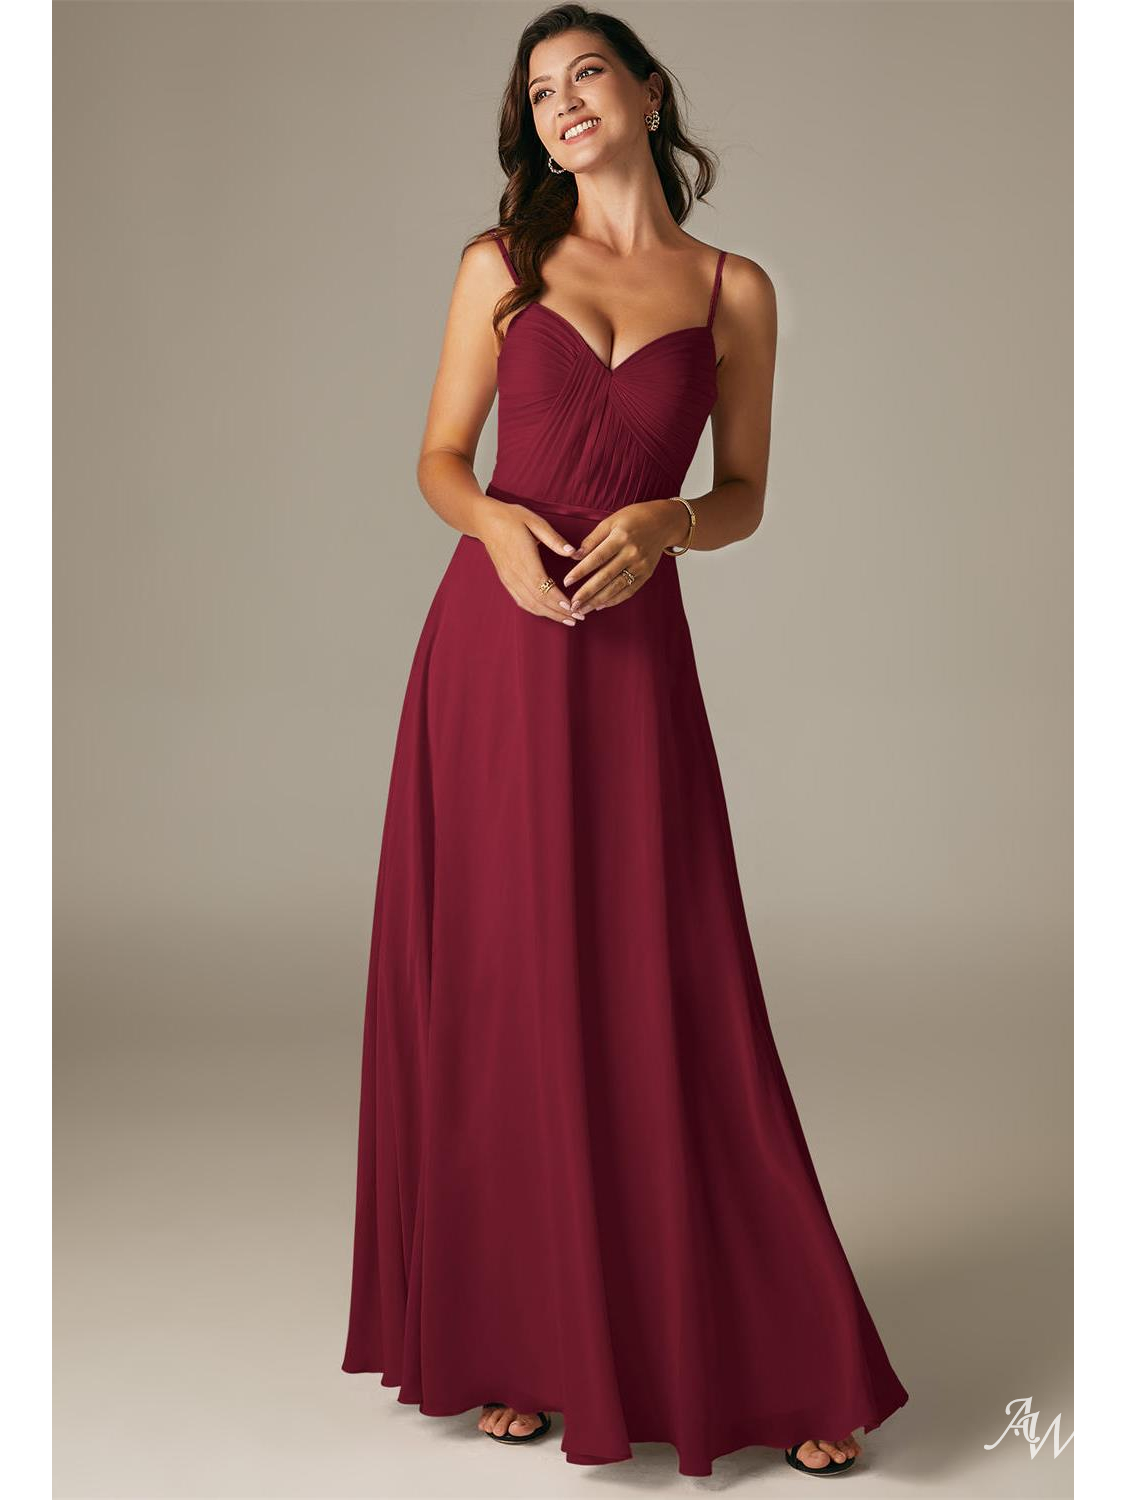 AW Georgia Dress, Burgundy Long Bridesmaid Dresses, 99.99 | AW Bridal